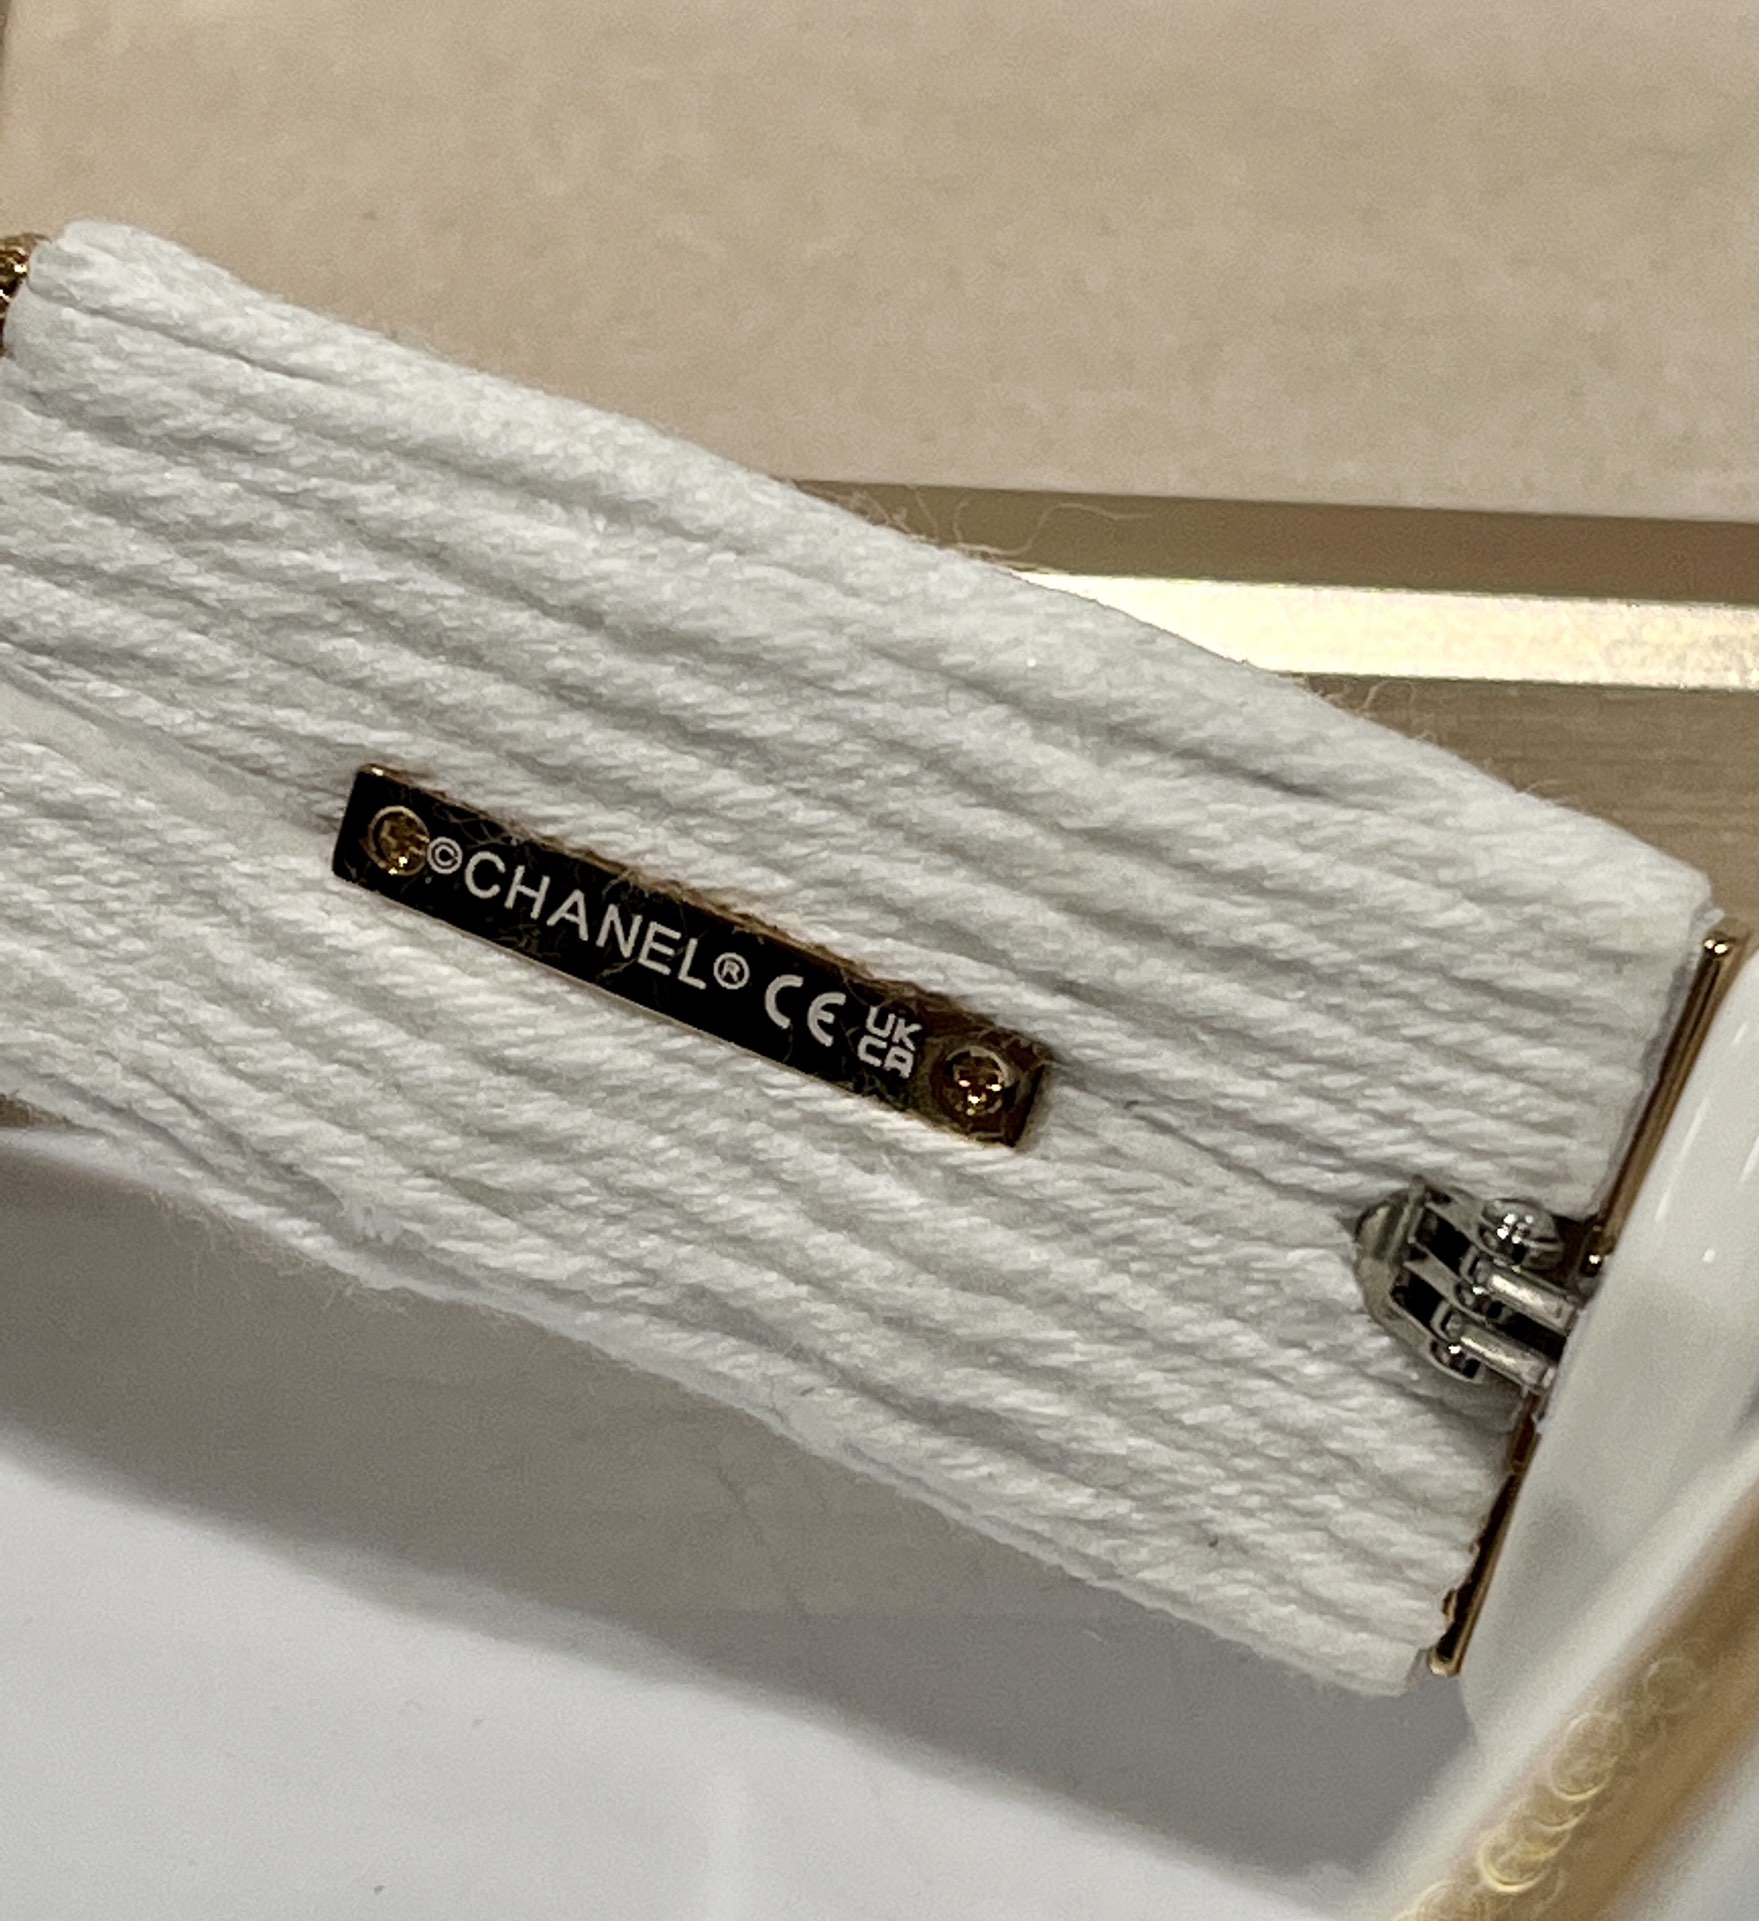 Chanel9130Size:51-19-145斜纹软呢系列窄款双c标志️上脸富家千金即视感1:1zP买